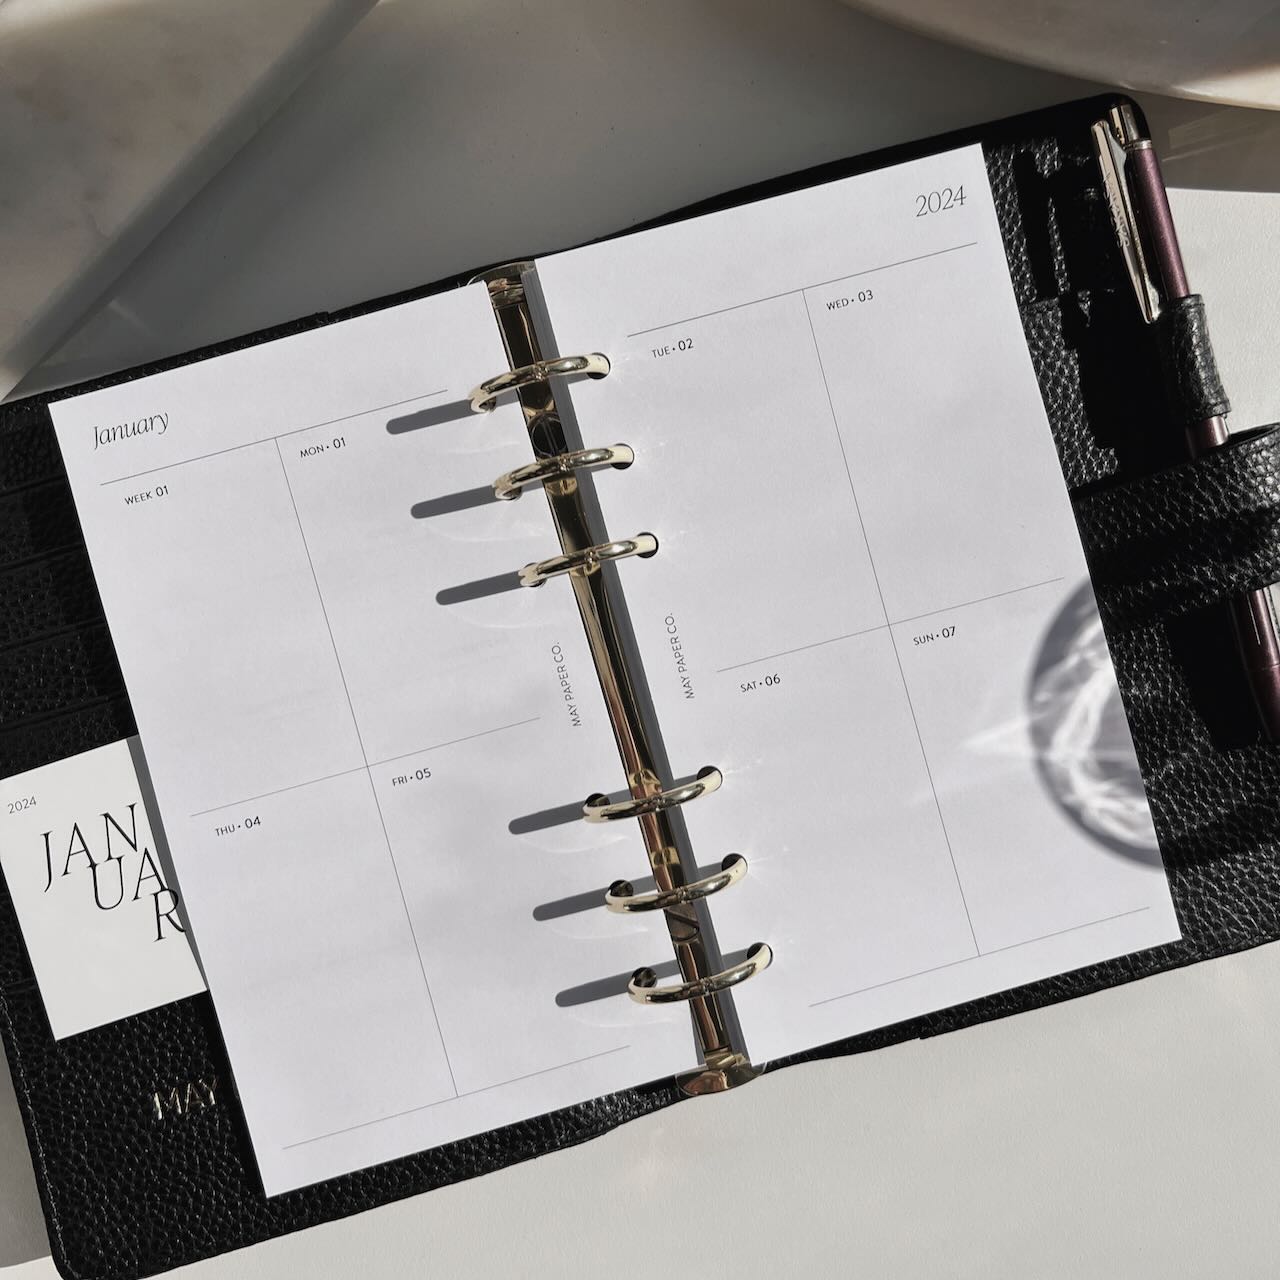 Louis Vuitton 2021 Advent Calendar - Silver Books, Stationery